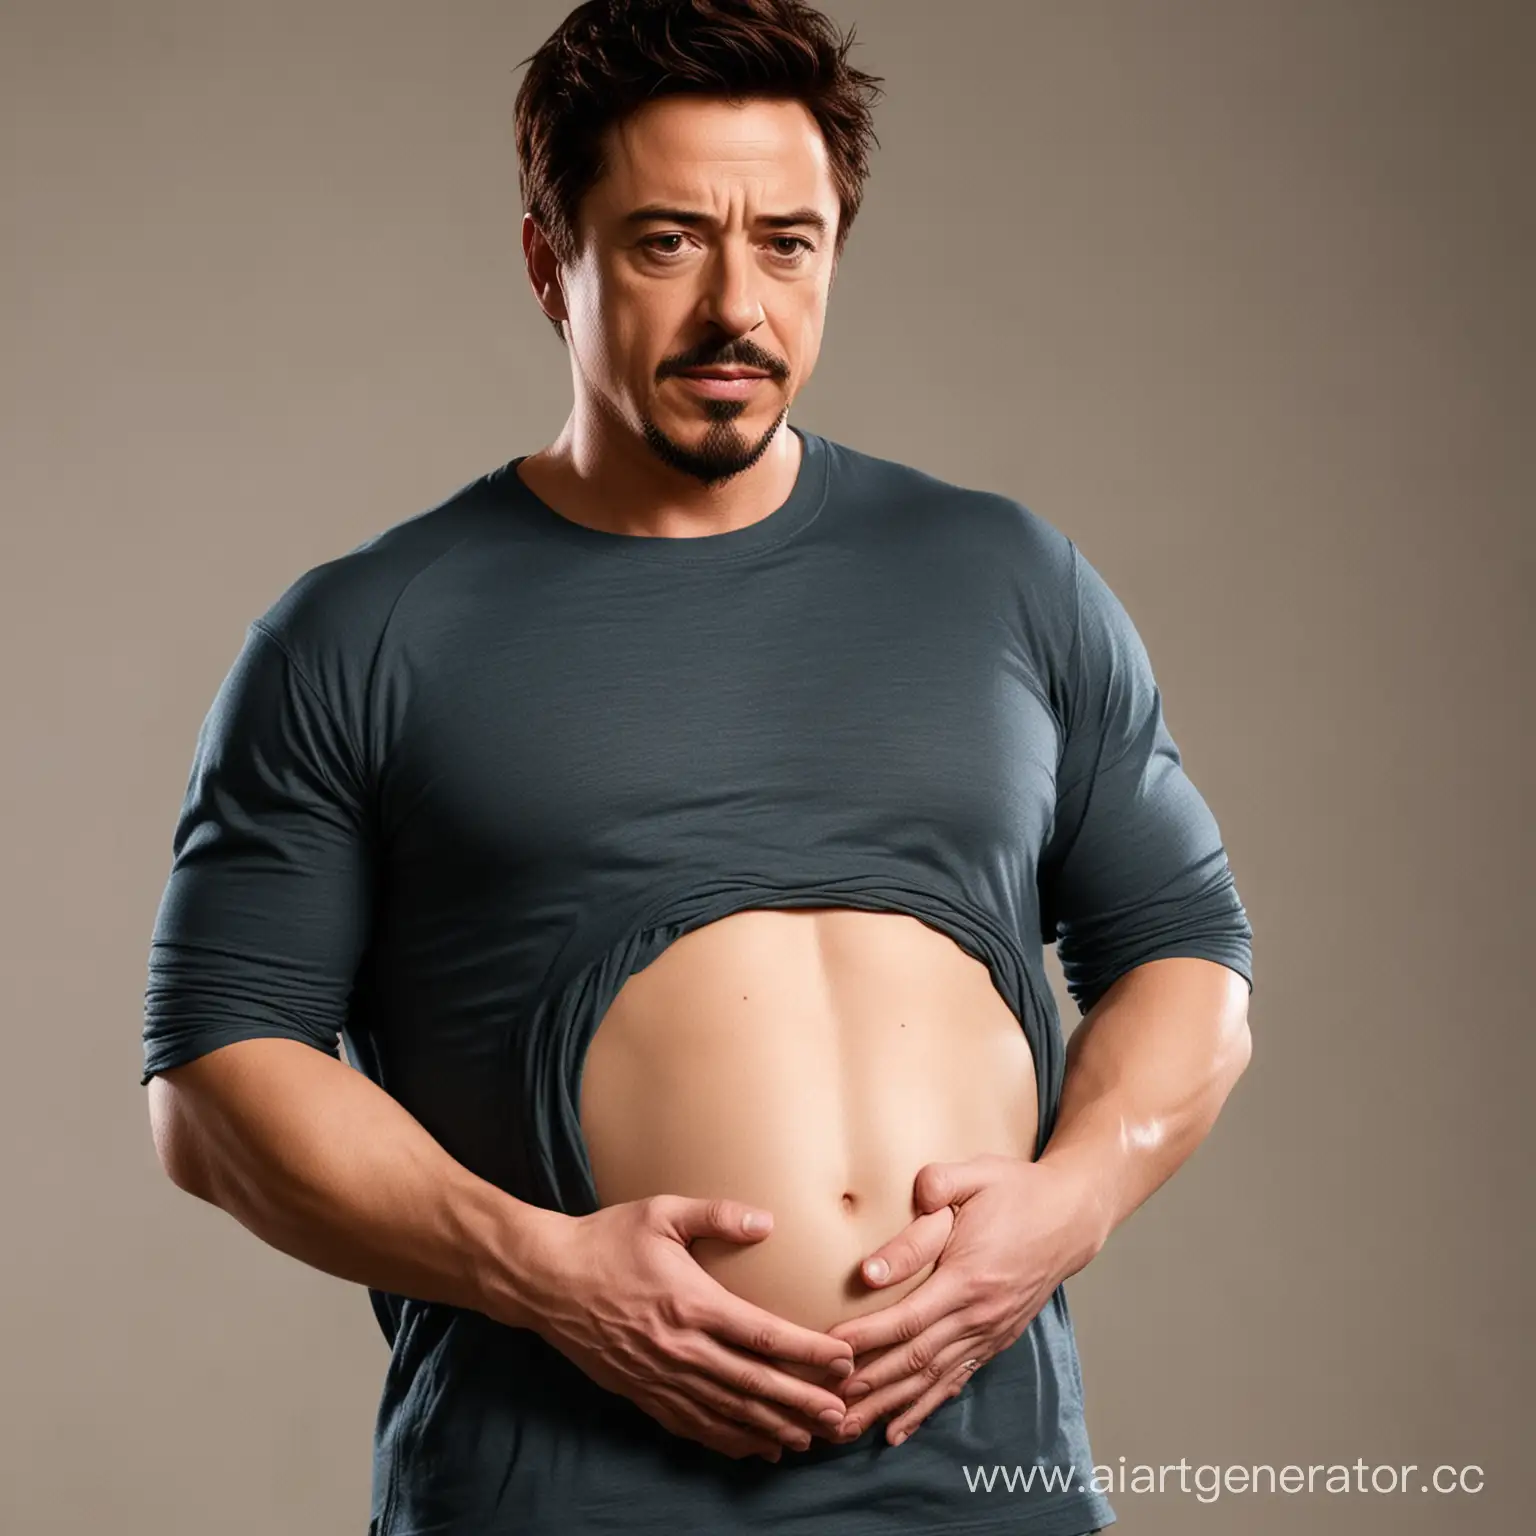 Expectant-Tony-Stark-Embracing-Fatherhood